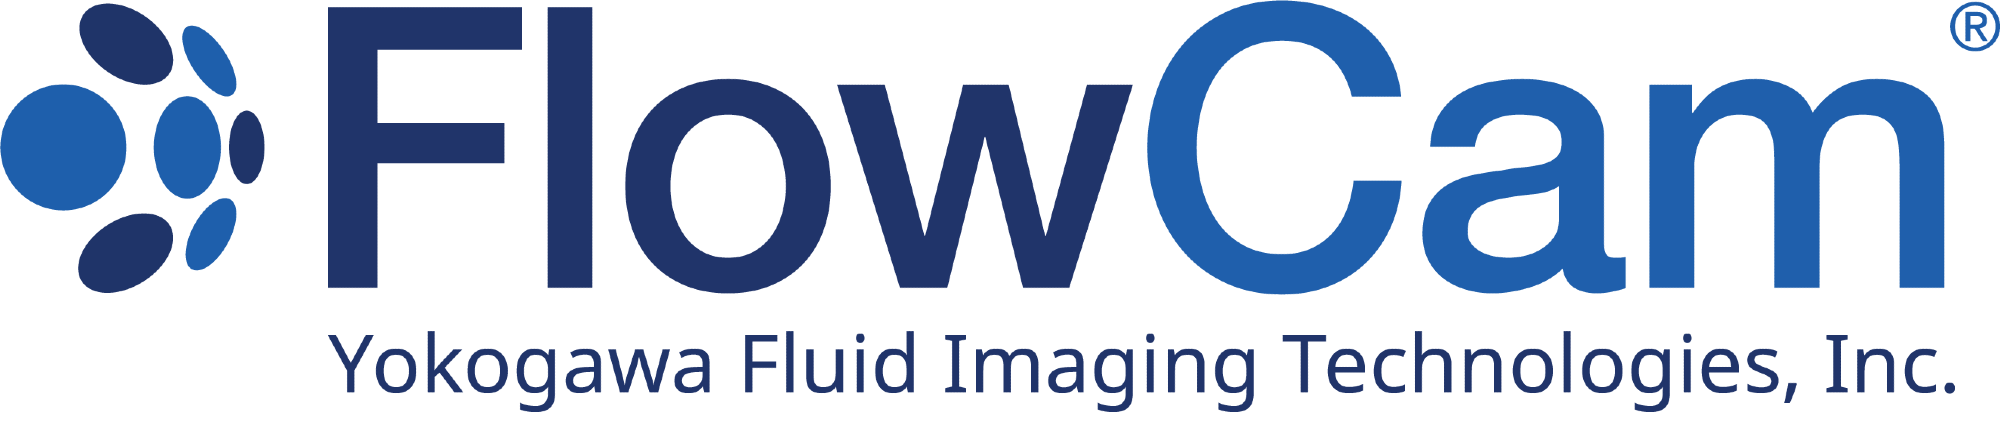 Yokogawa Fluid Imaging Technologies, Inc. logo.